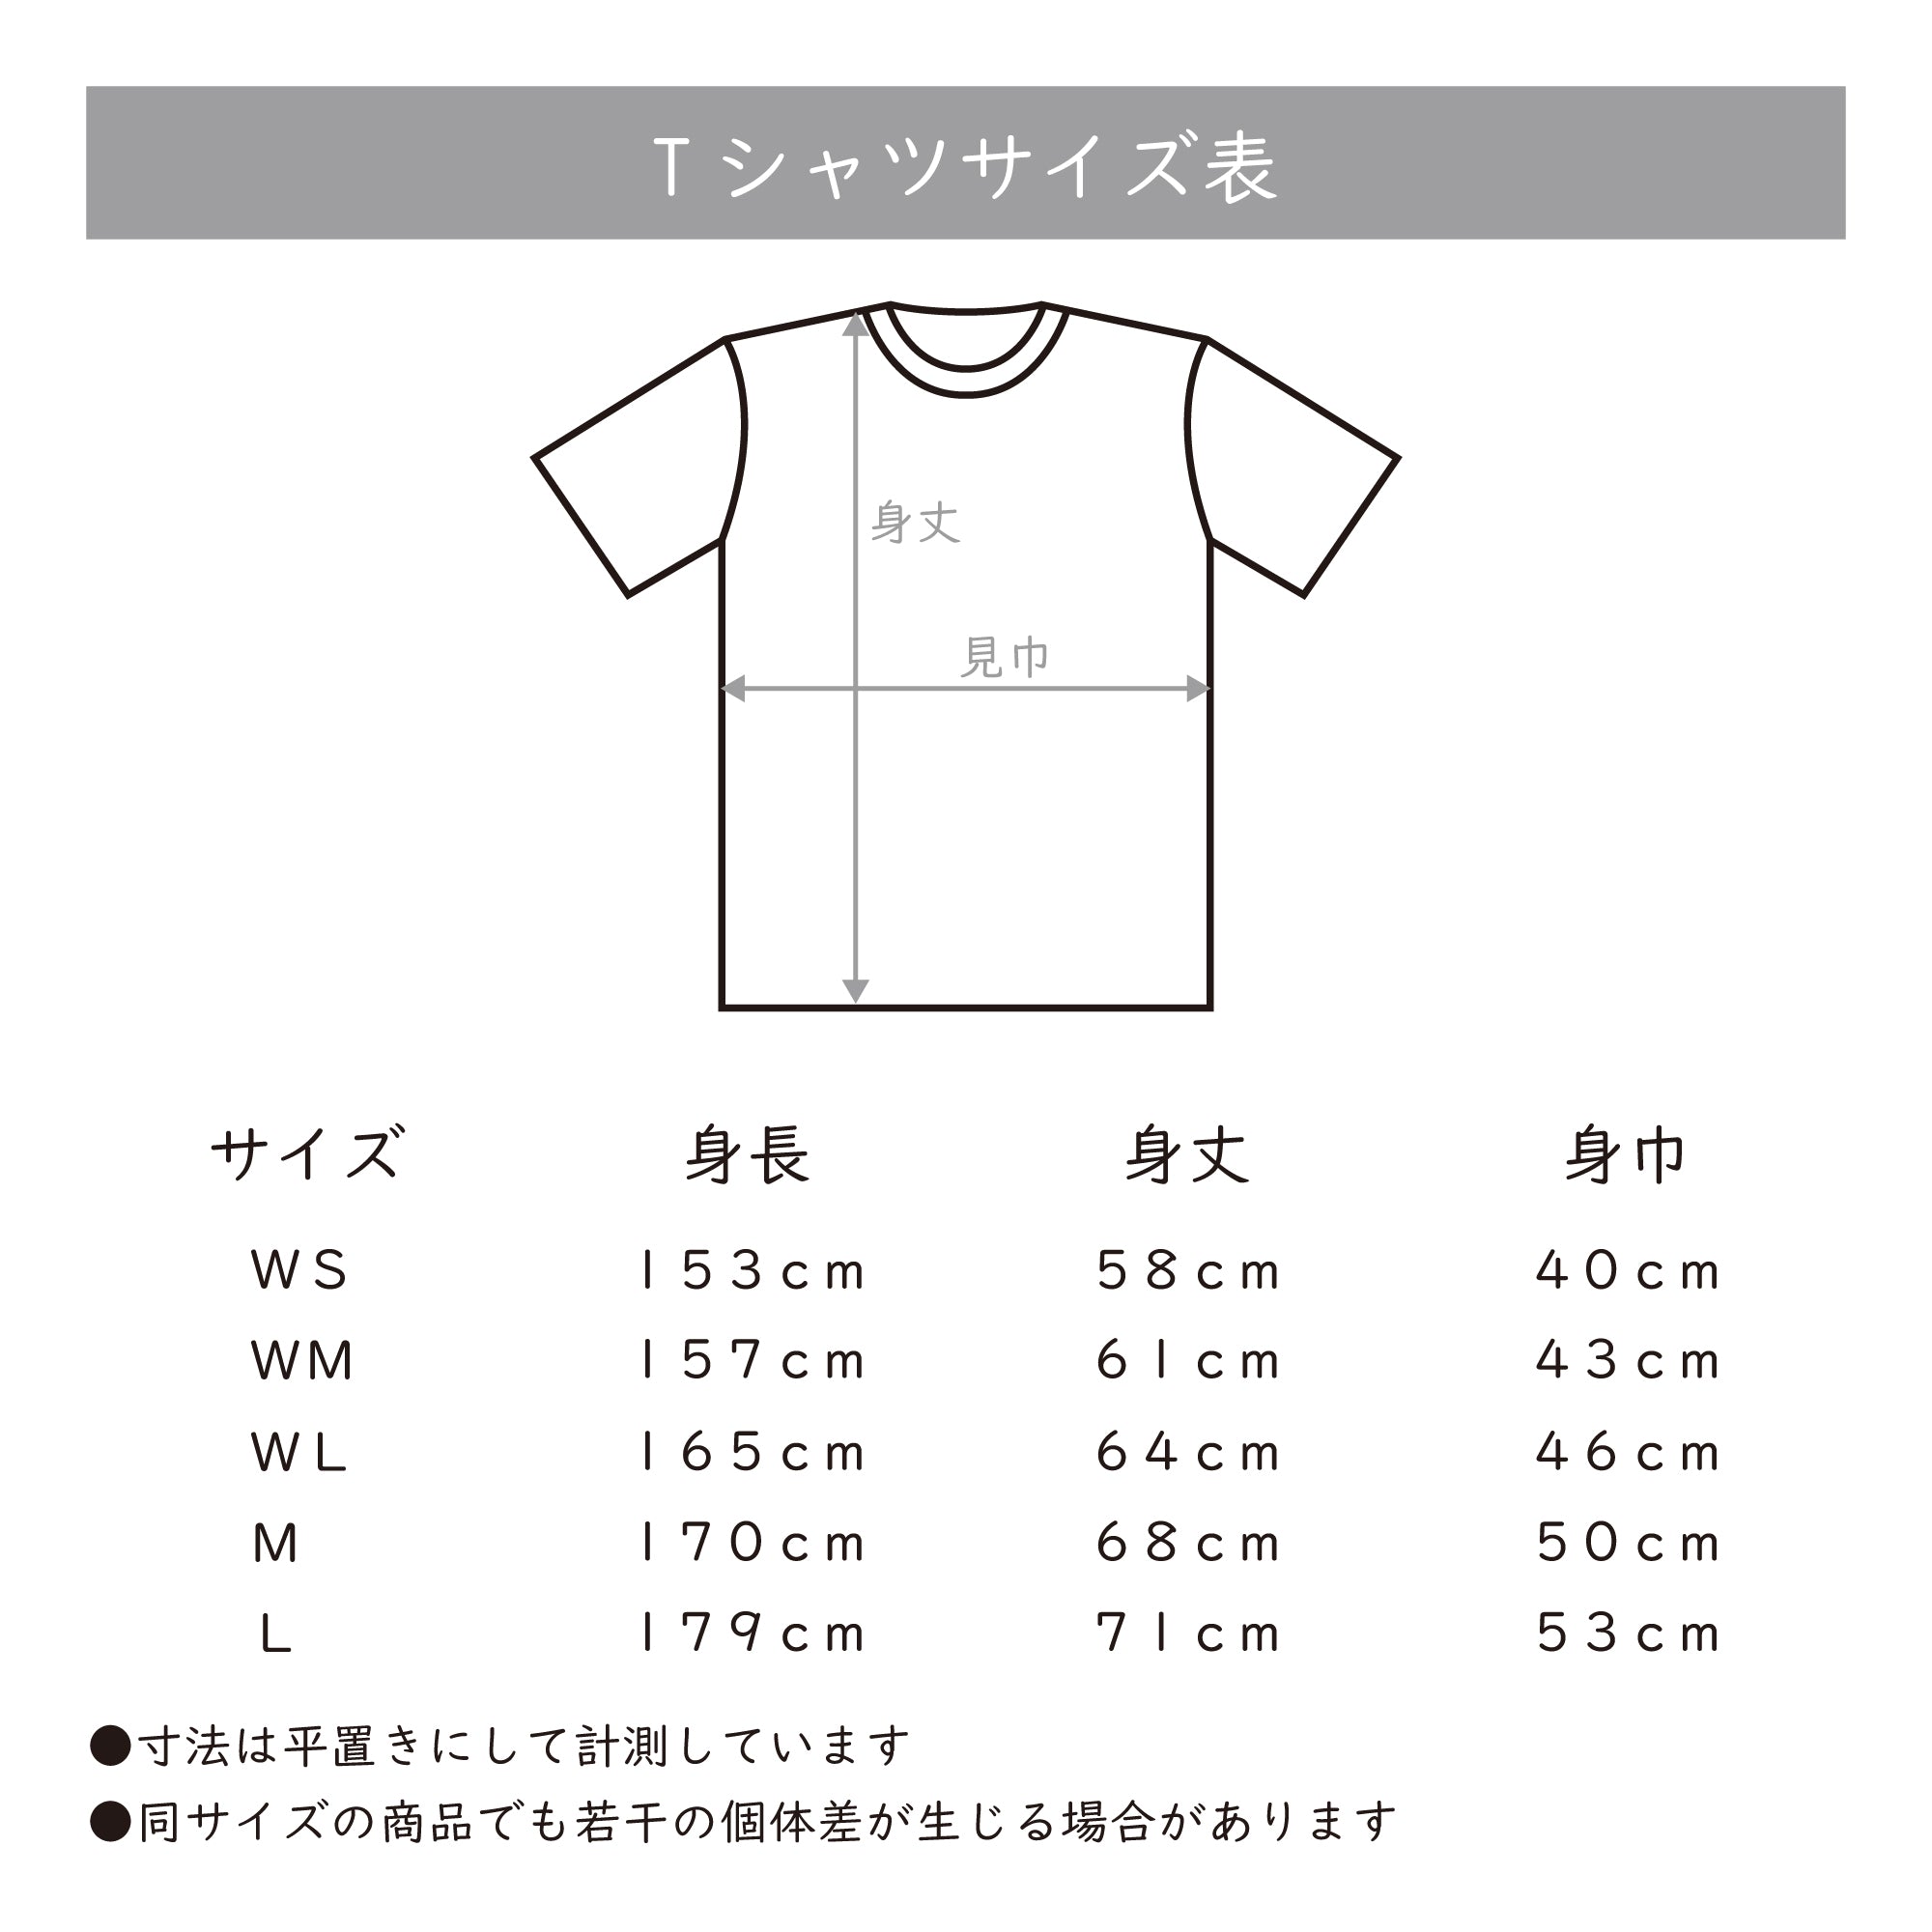 Tシャツ 渋谷 WS